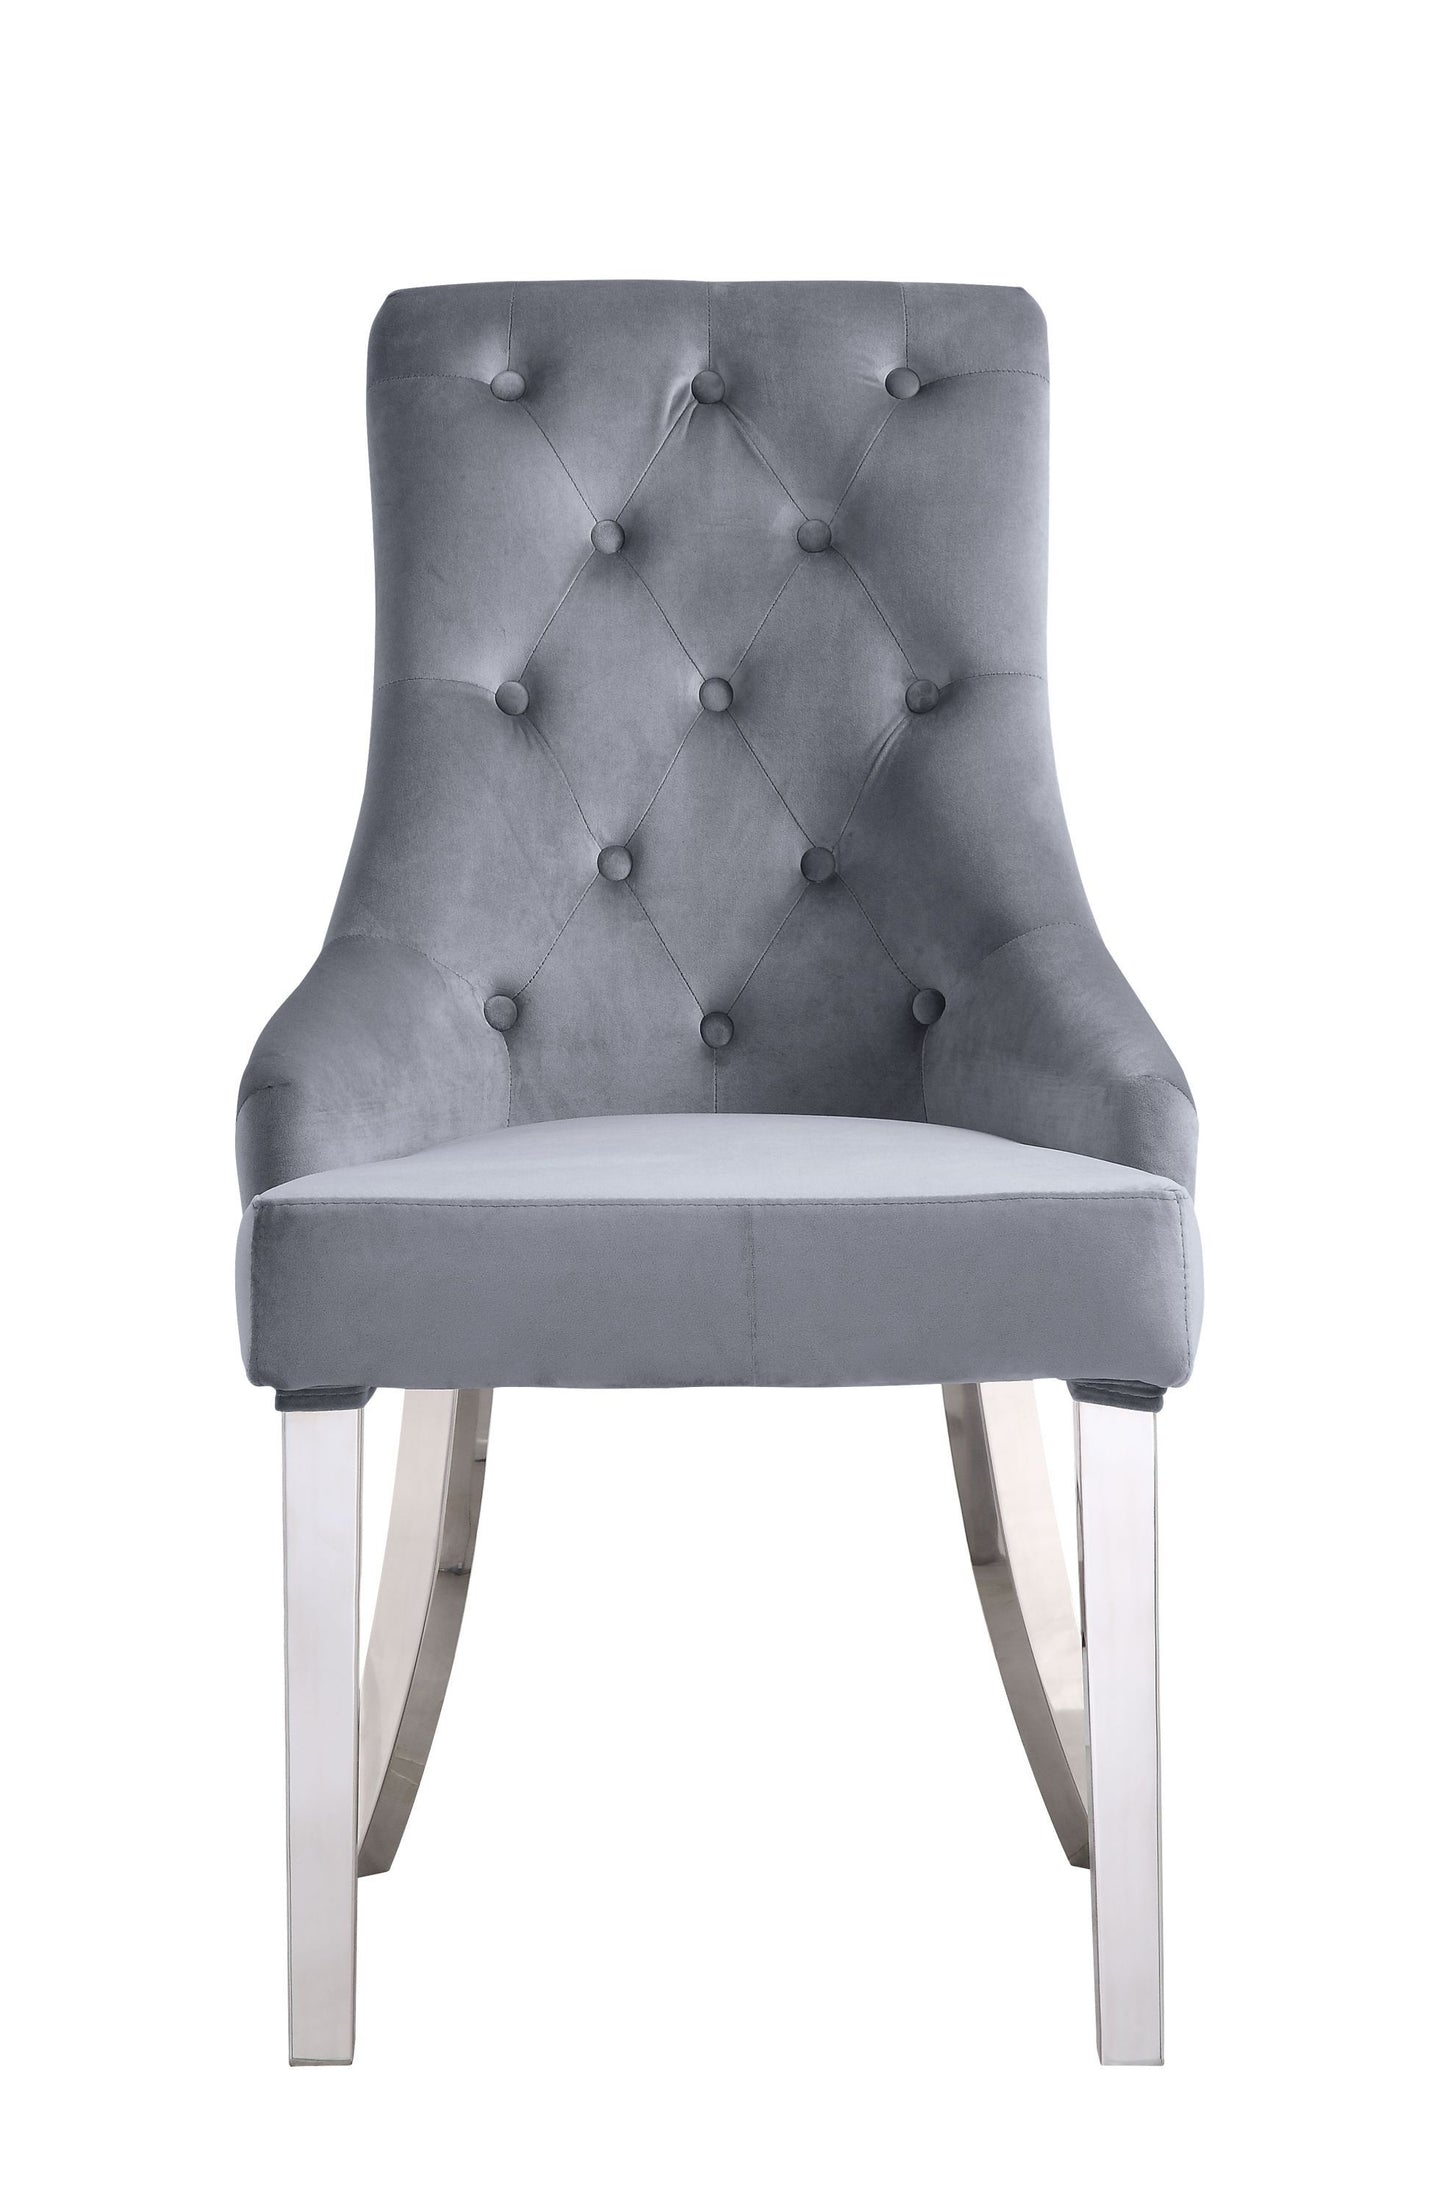 ACME Satinka Side Chair, Gray Fabric & Mirrored Silver Finish